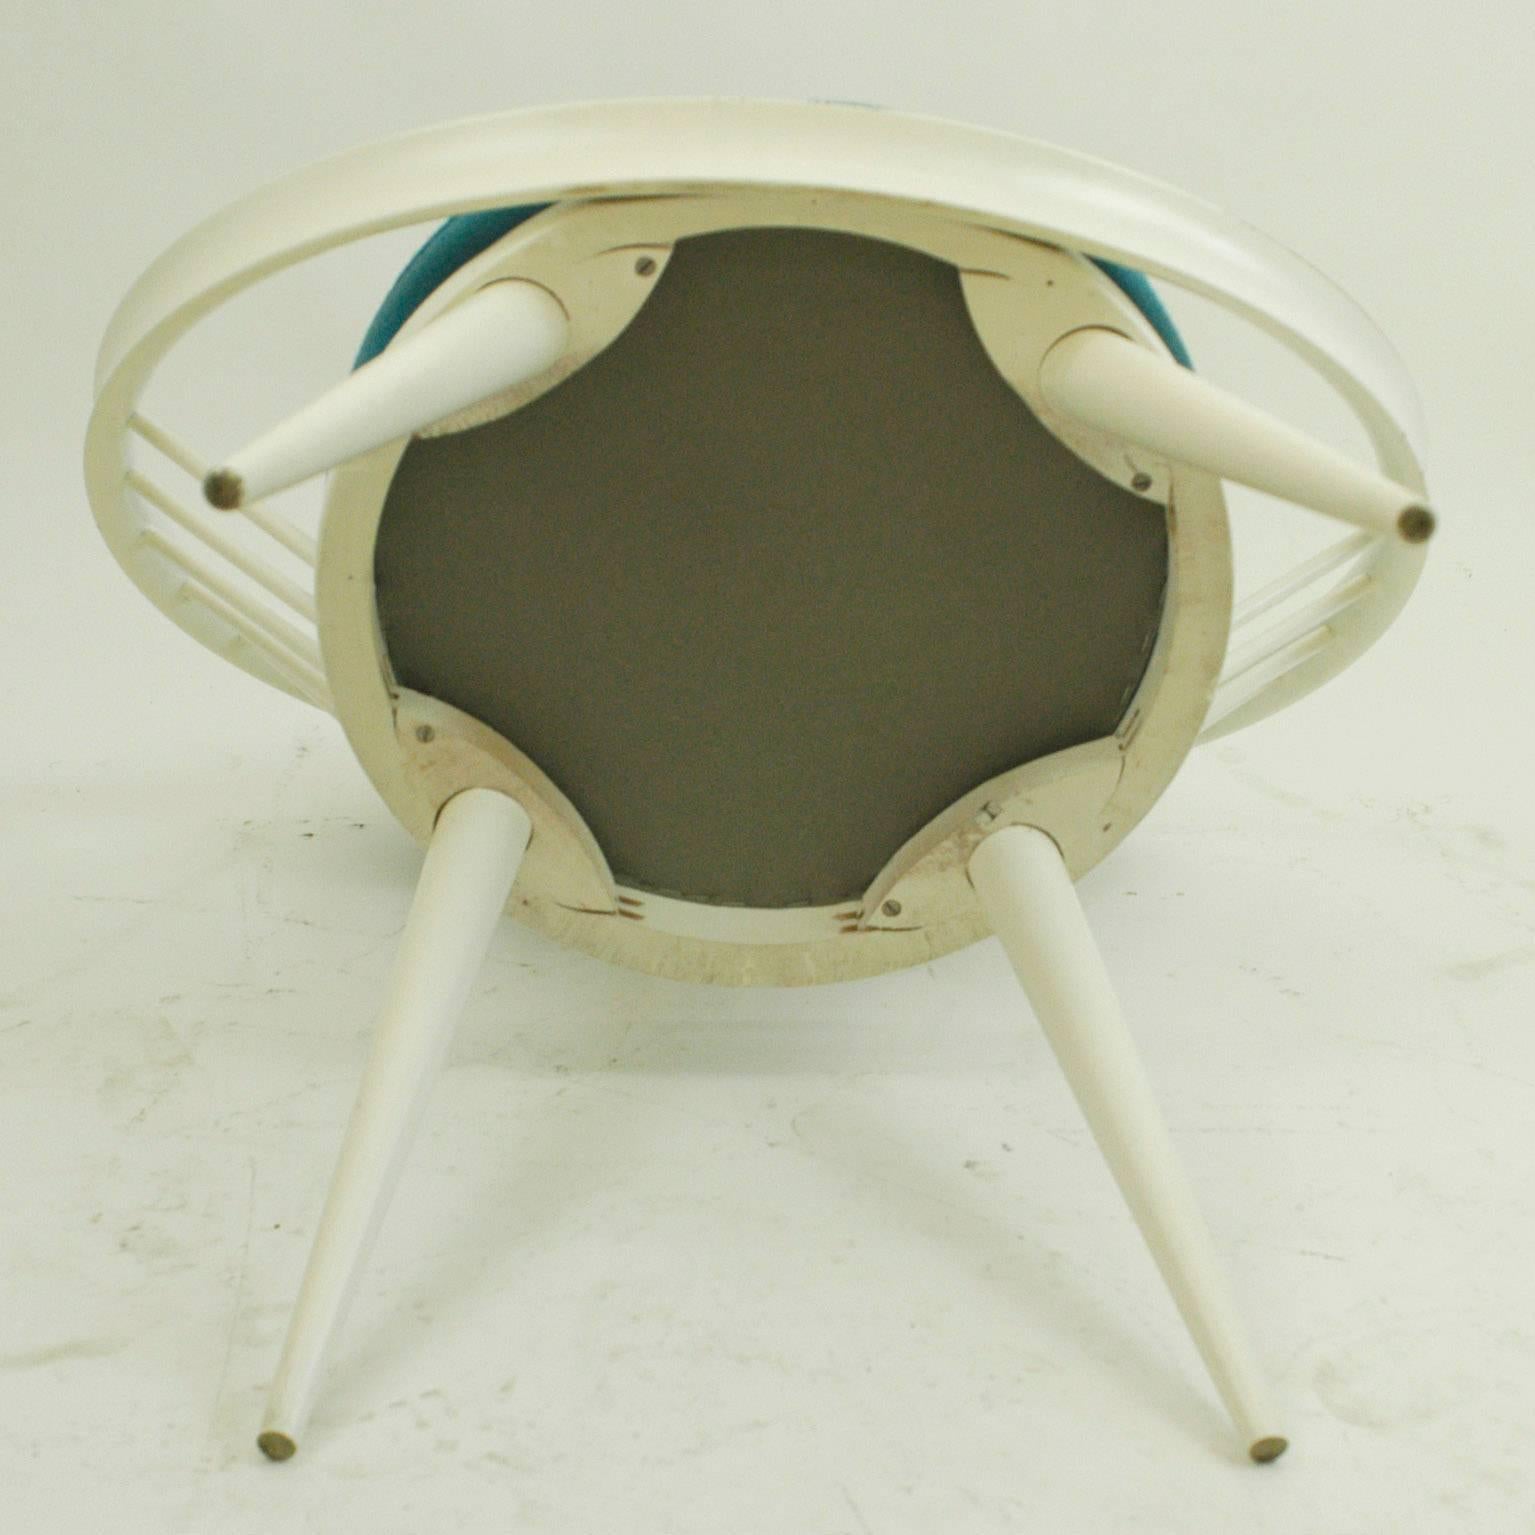 White and Blue Scandinavian Modern Circle Chair by Yngve Ekström 1